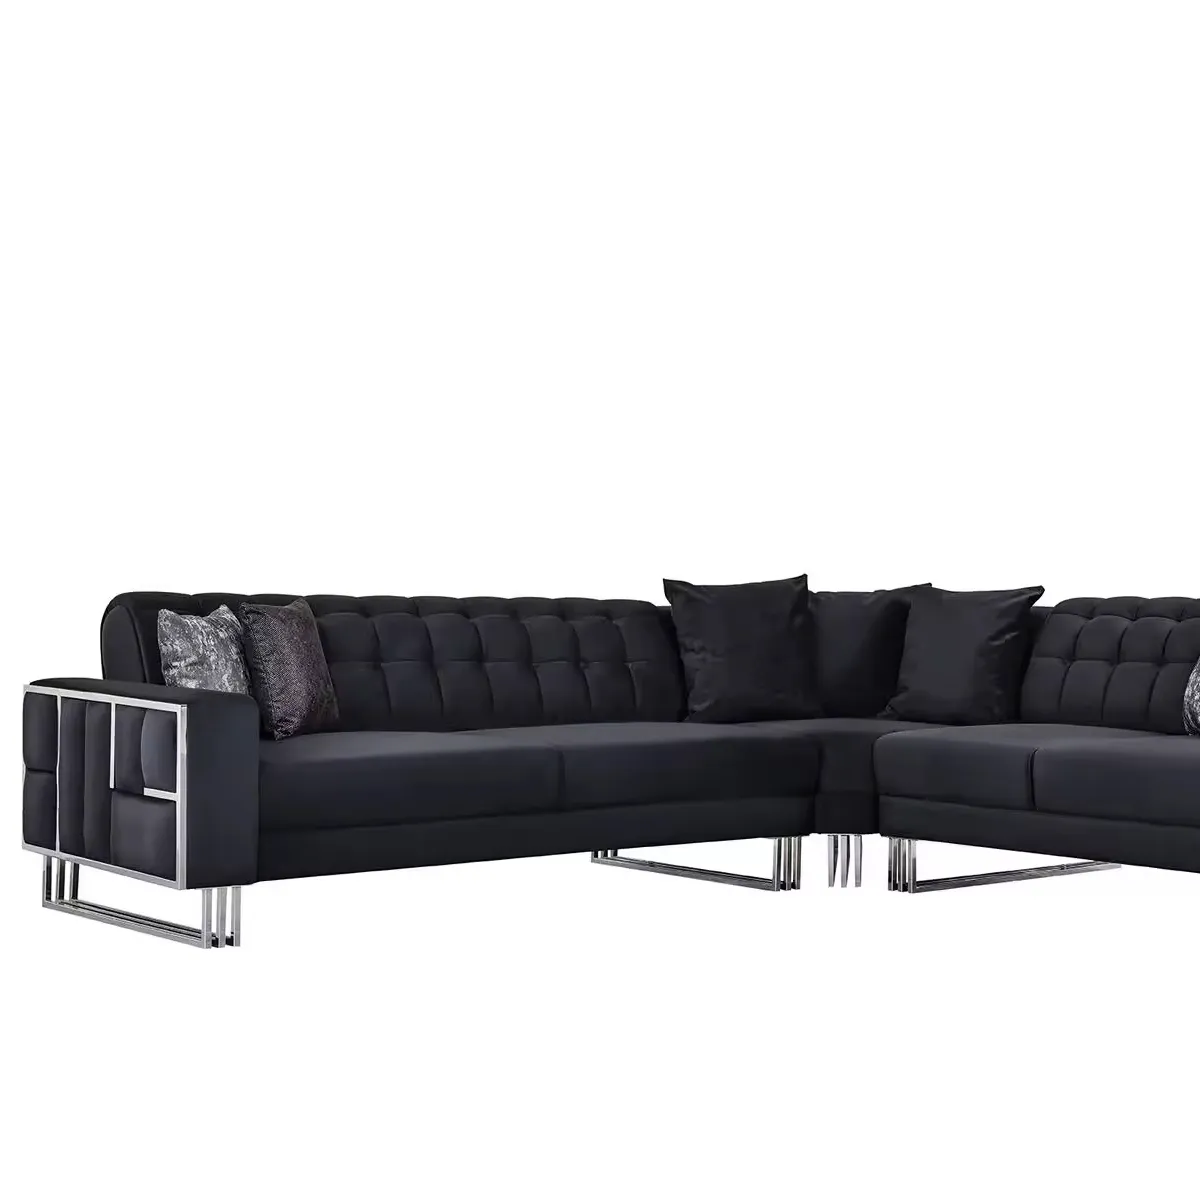 Luxury corner sofa textile couches furniture corner set metal elements couch sofa